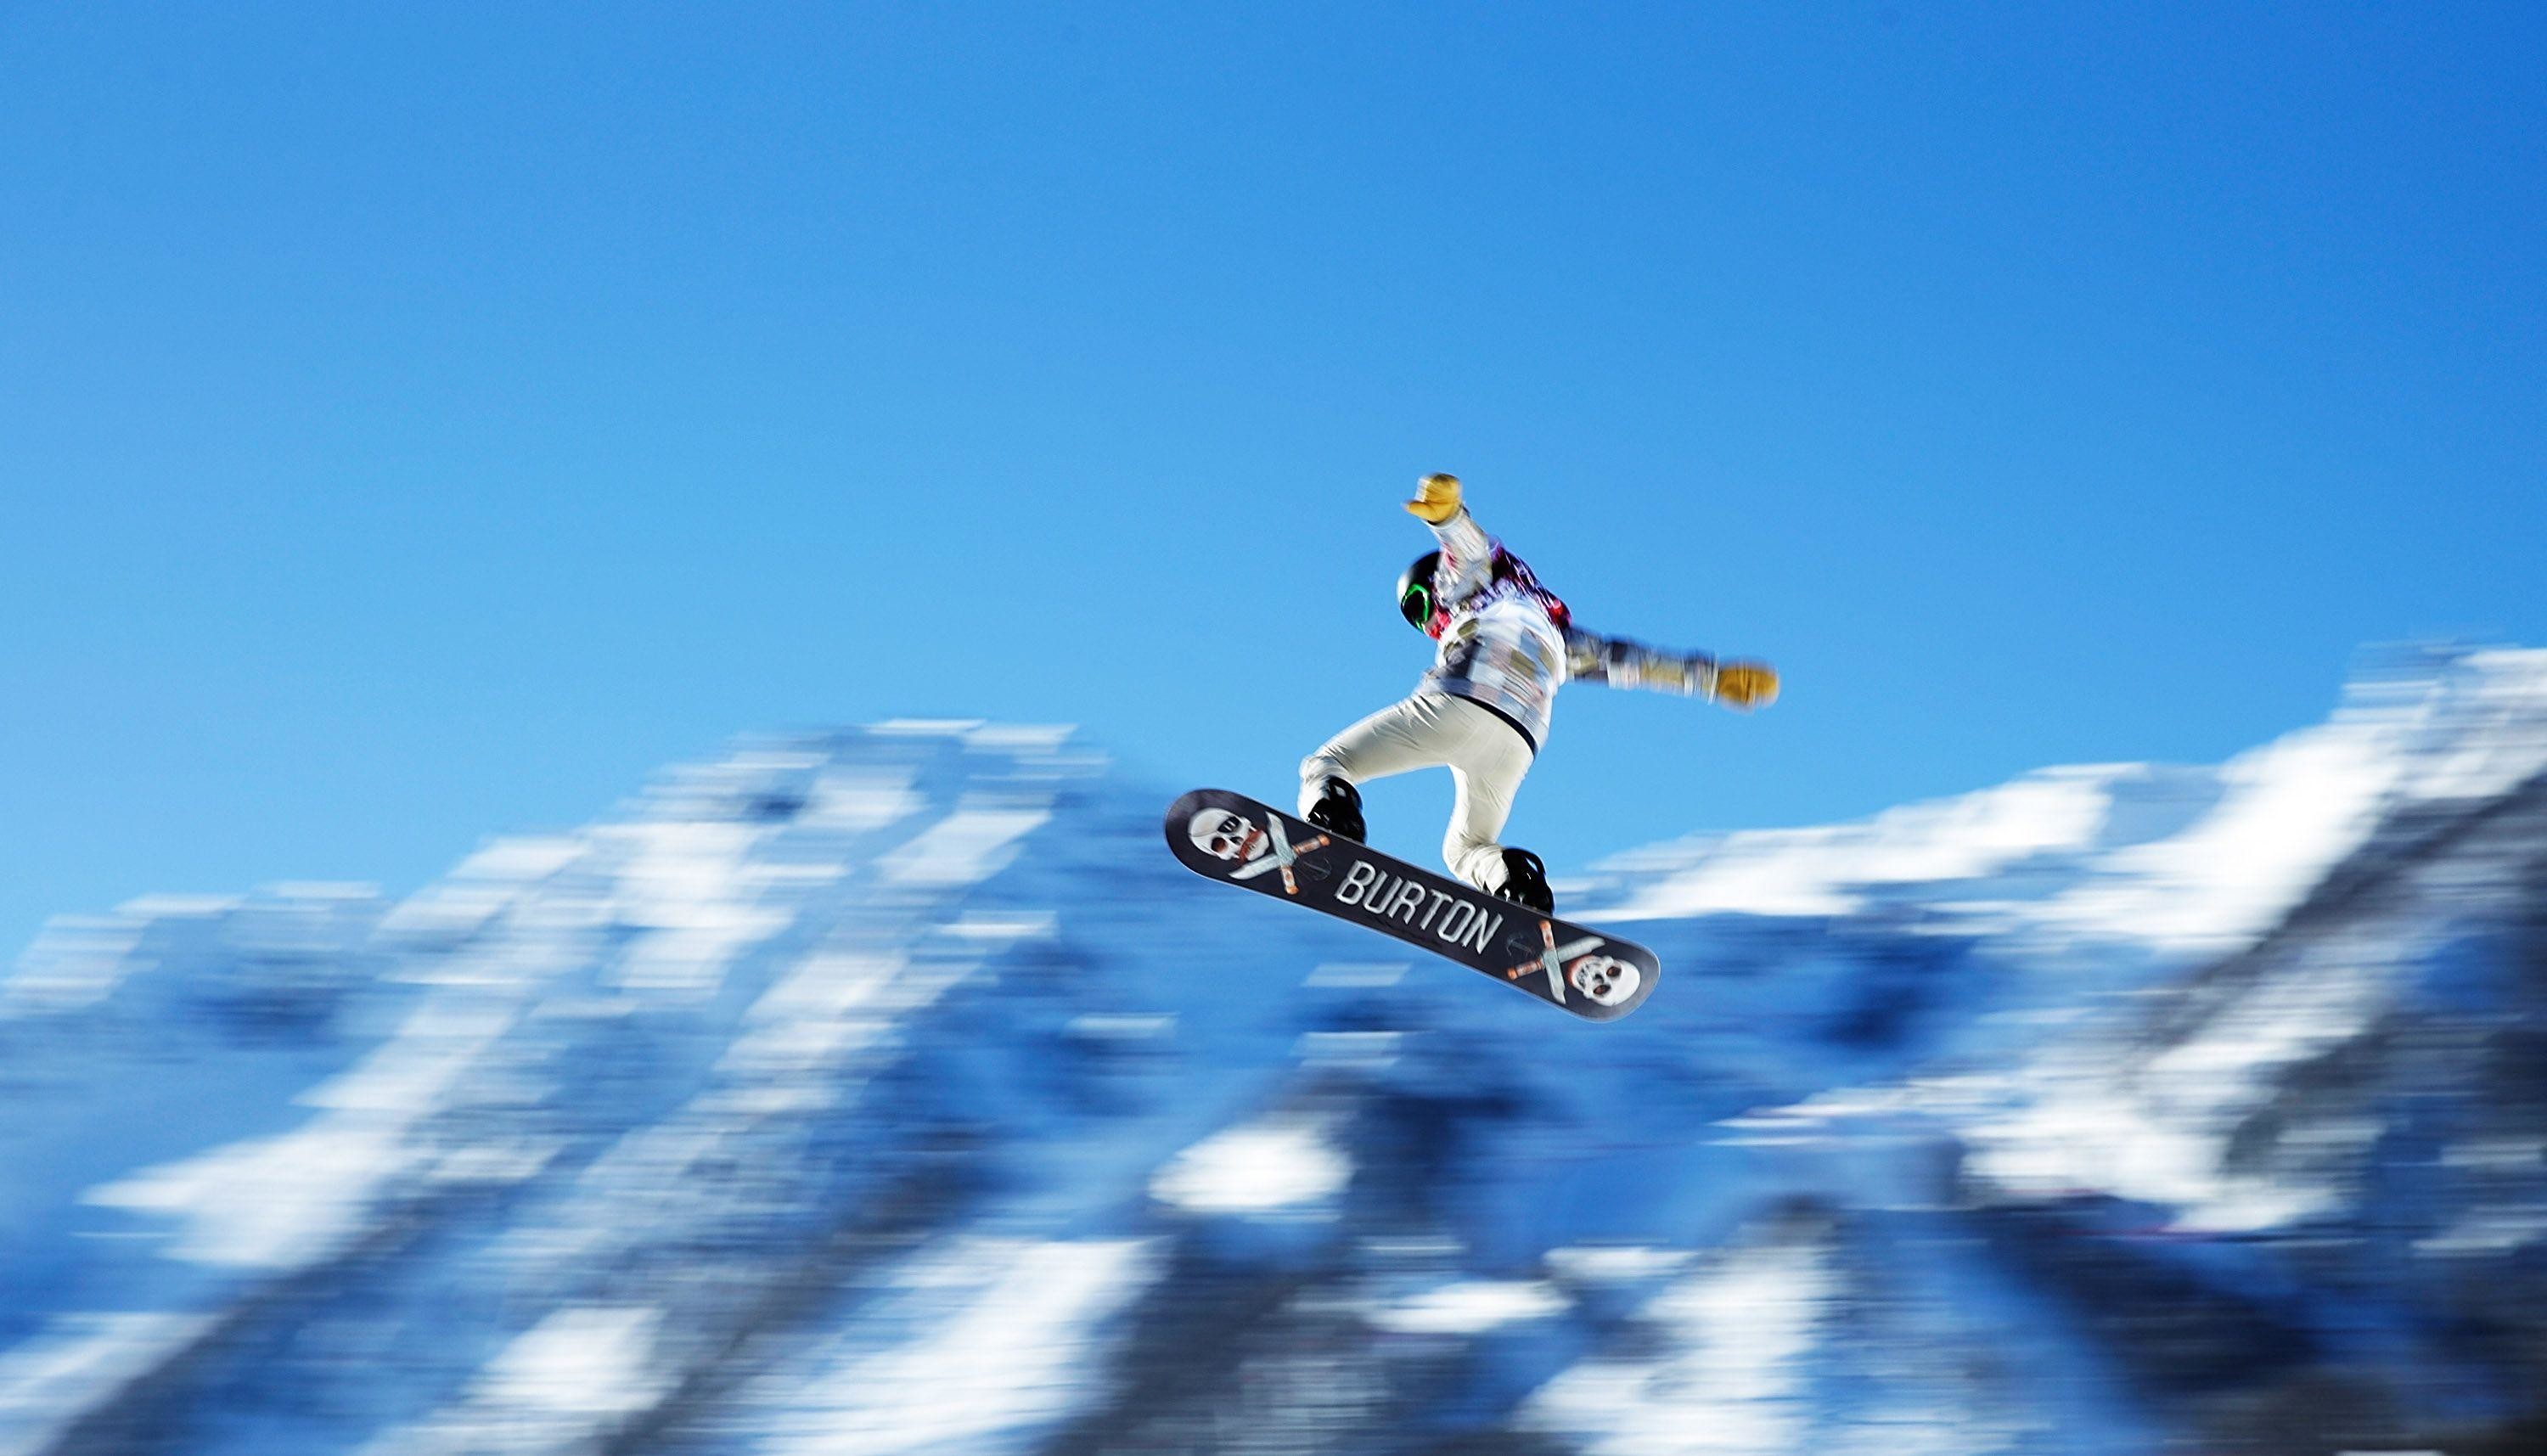 White snowboarding